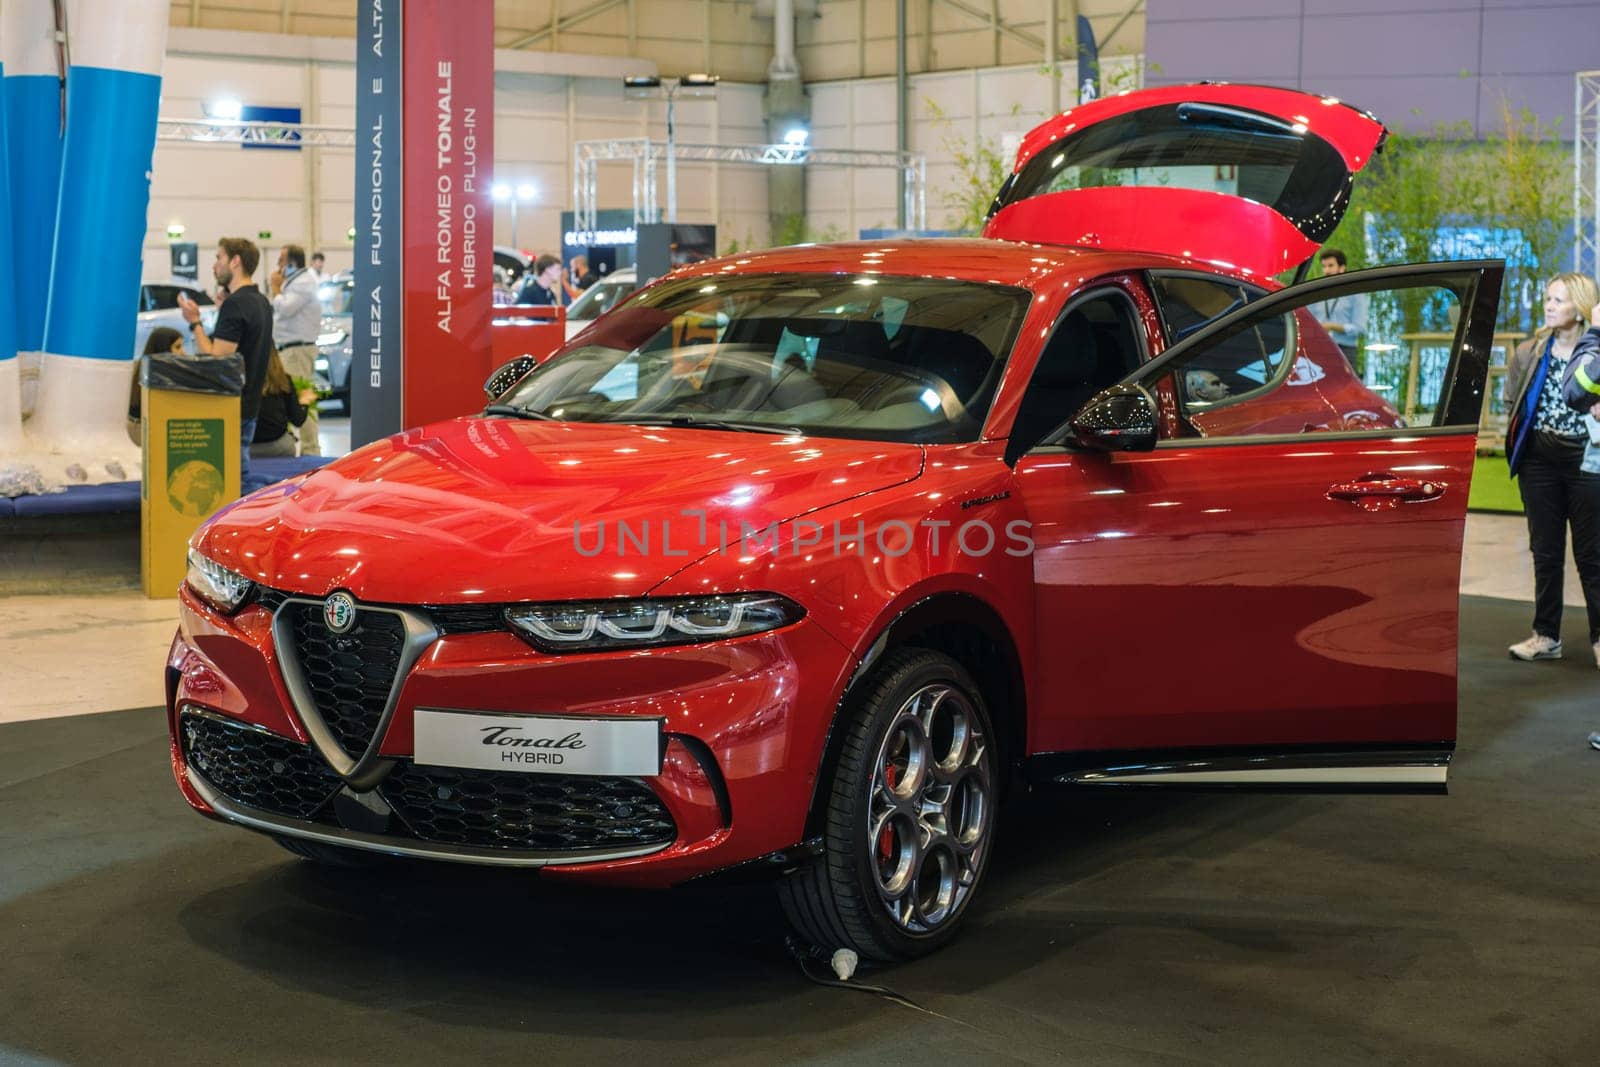 Alfa Romeo Tonale electric hybrid car at ECAR SHOW - Hybrid and Electric Motor Show by dimol